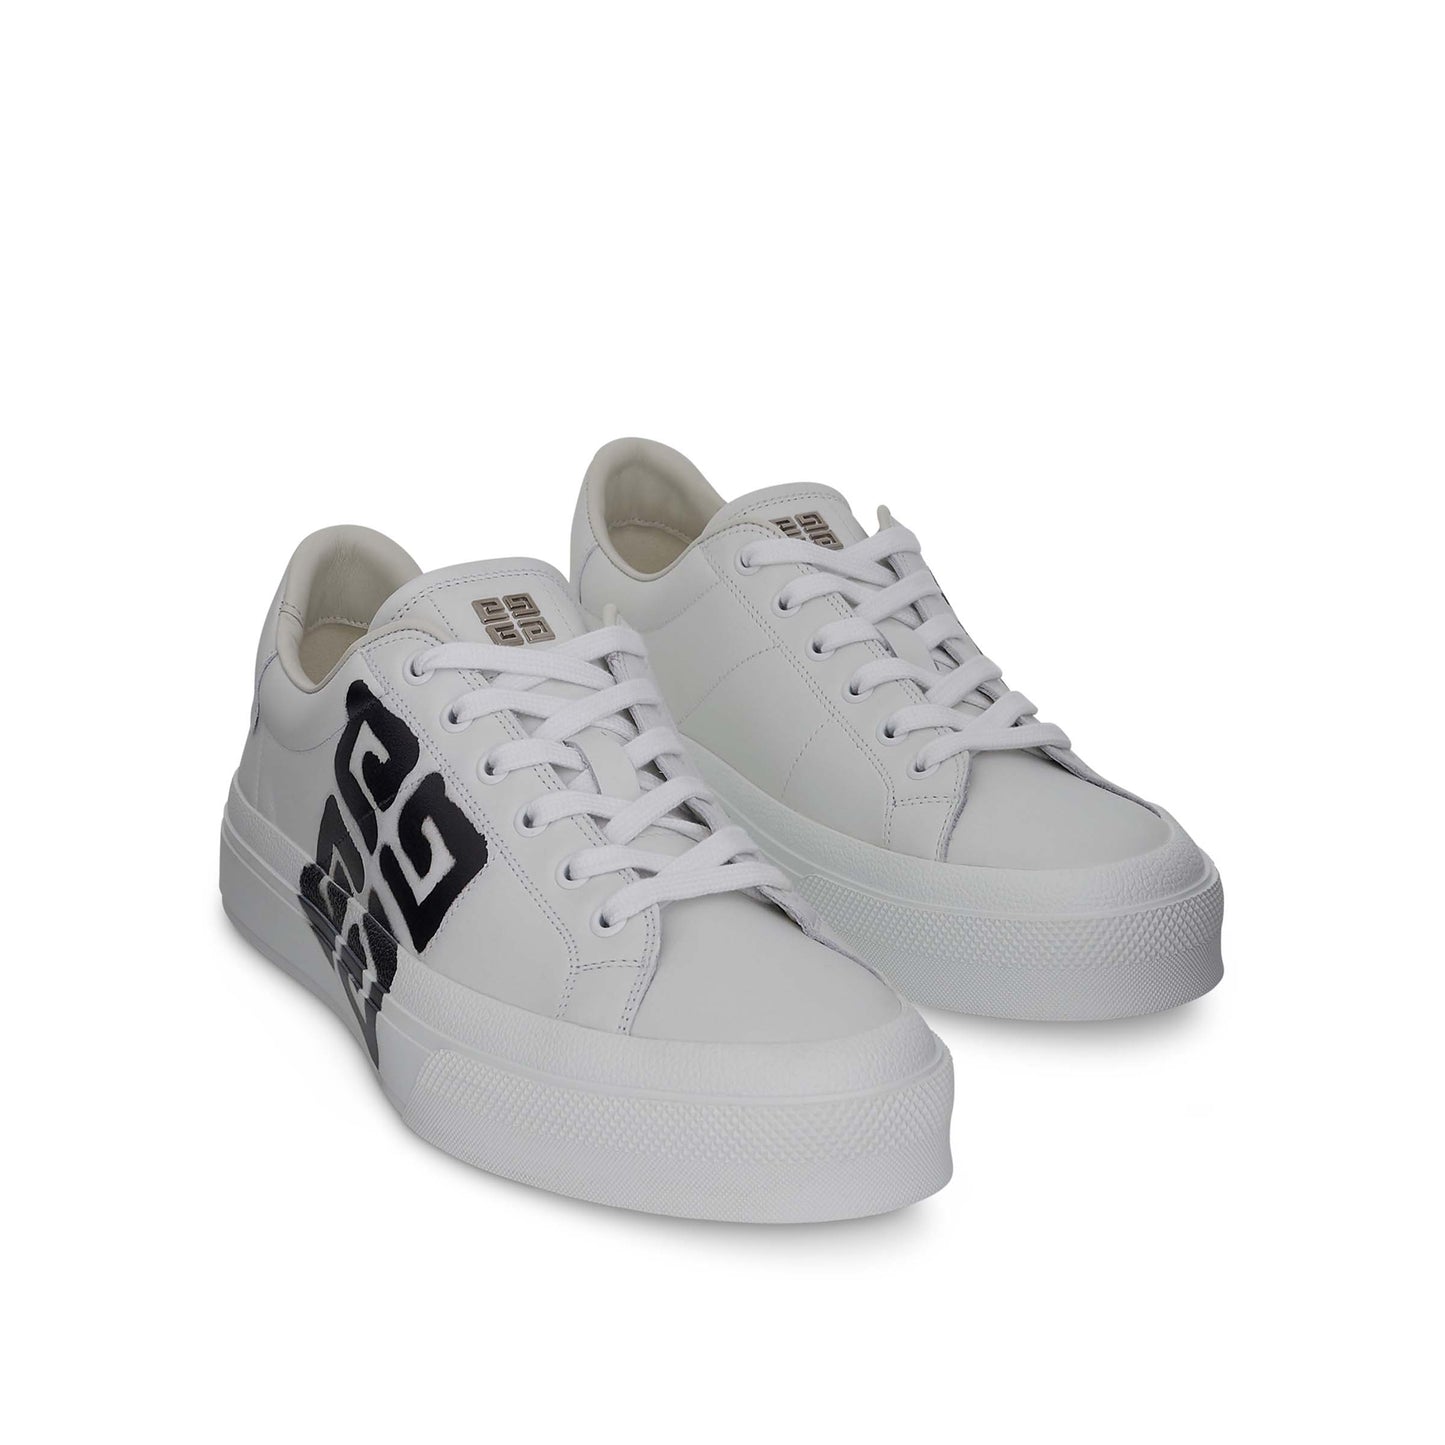 City Sport Sneaker with 4G Spray Print in White/Black